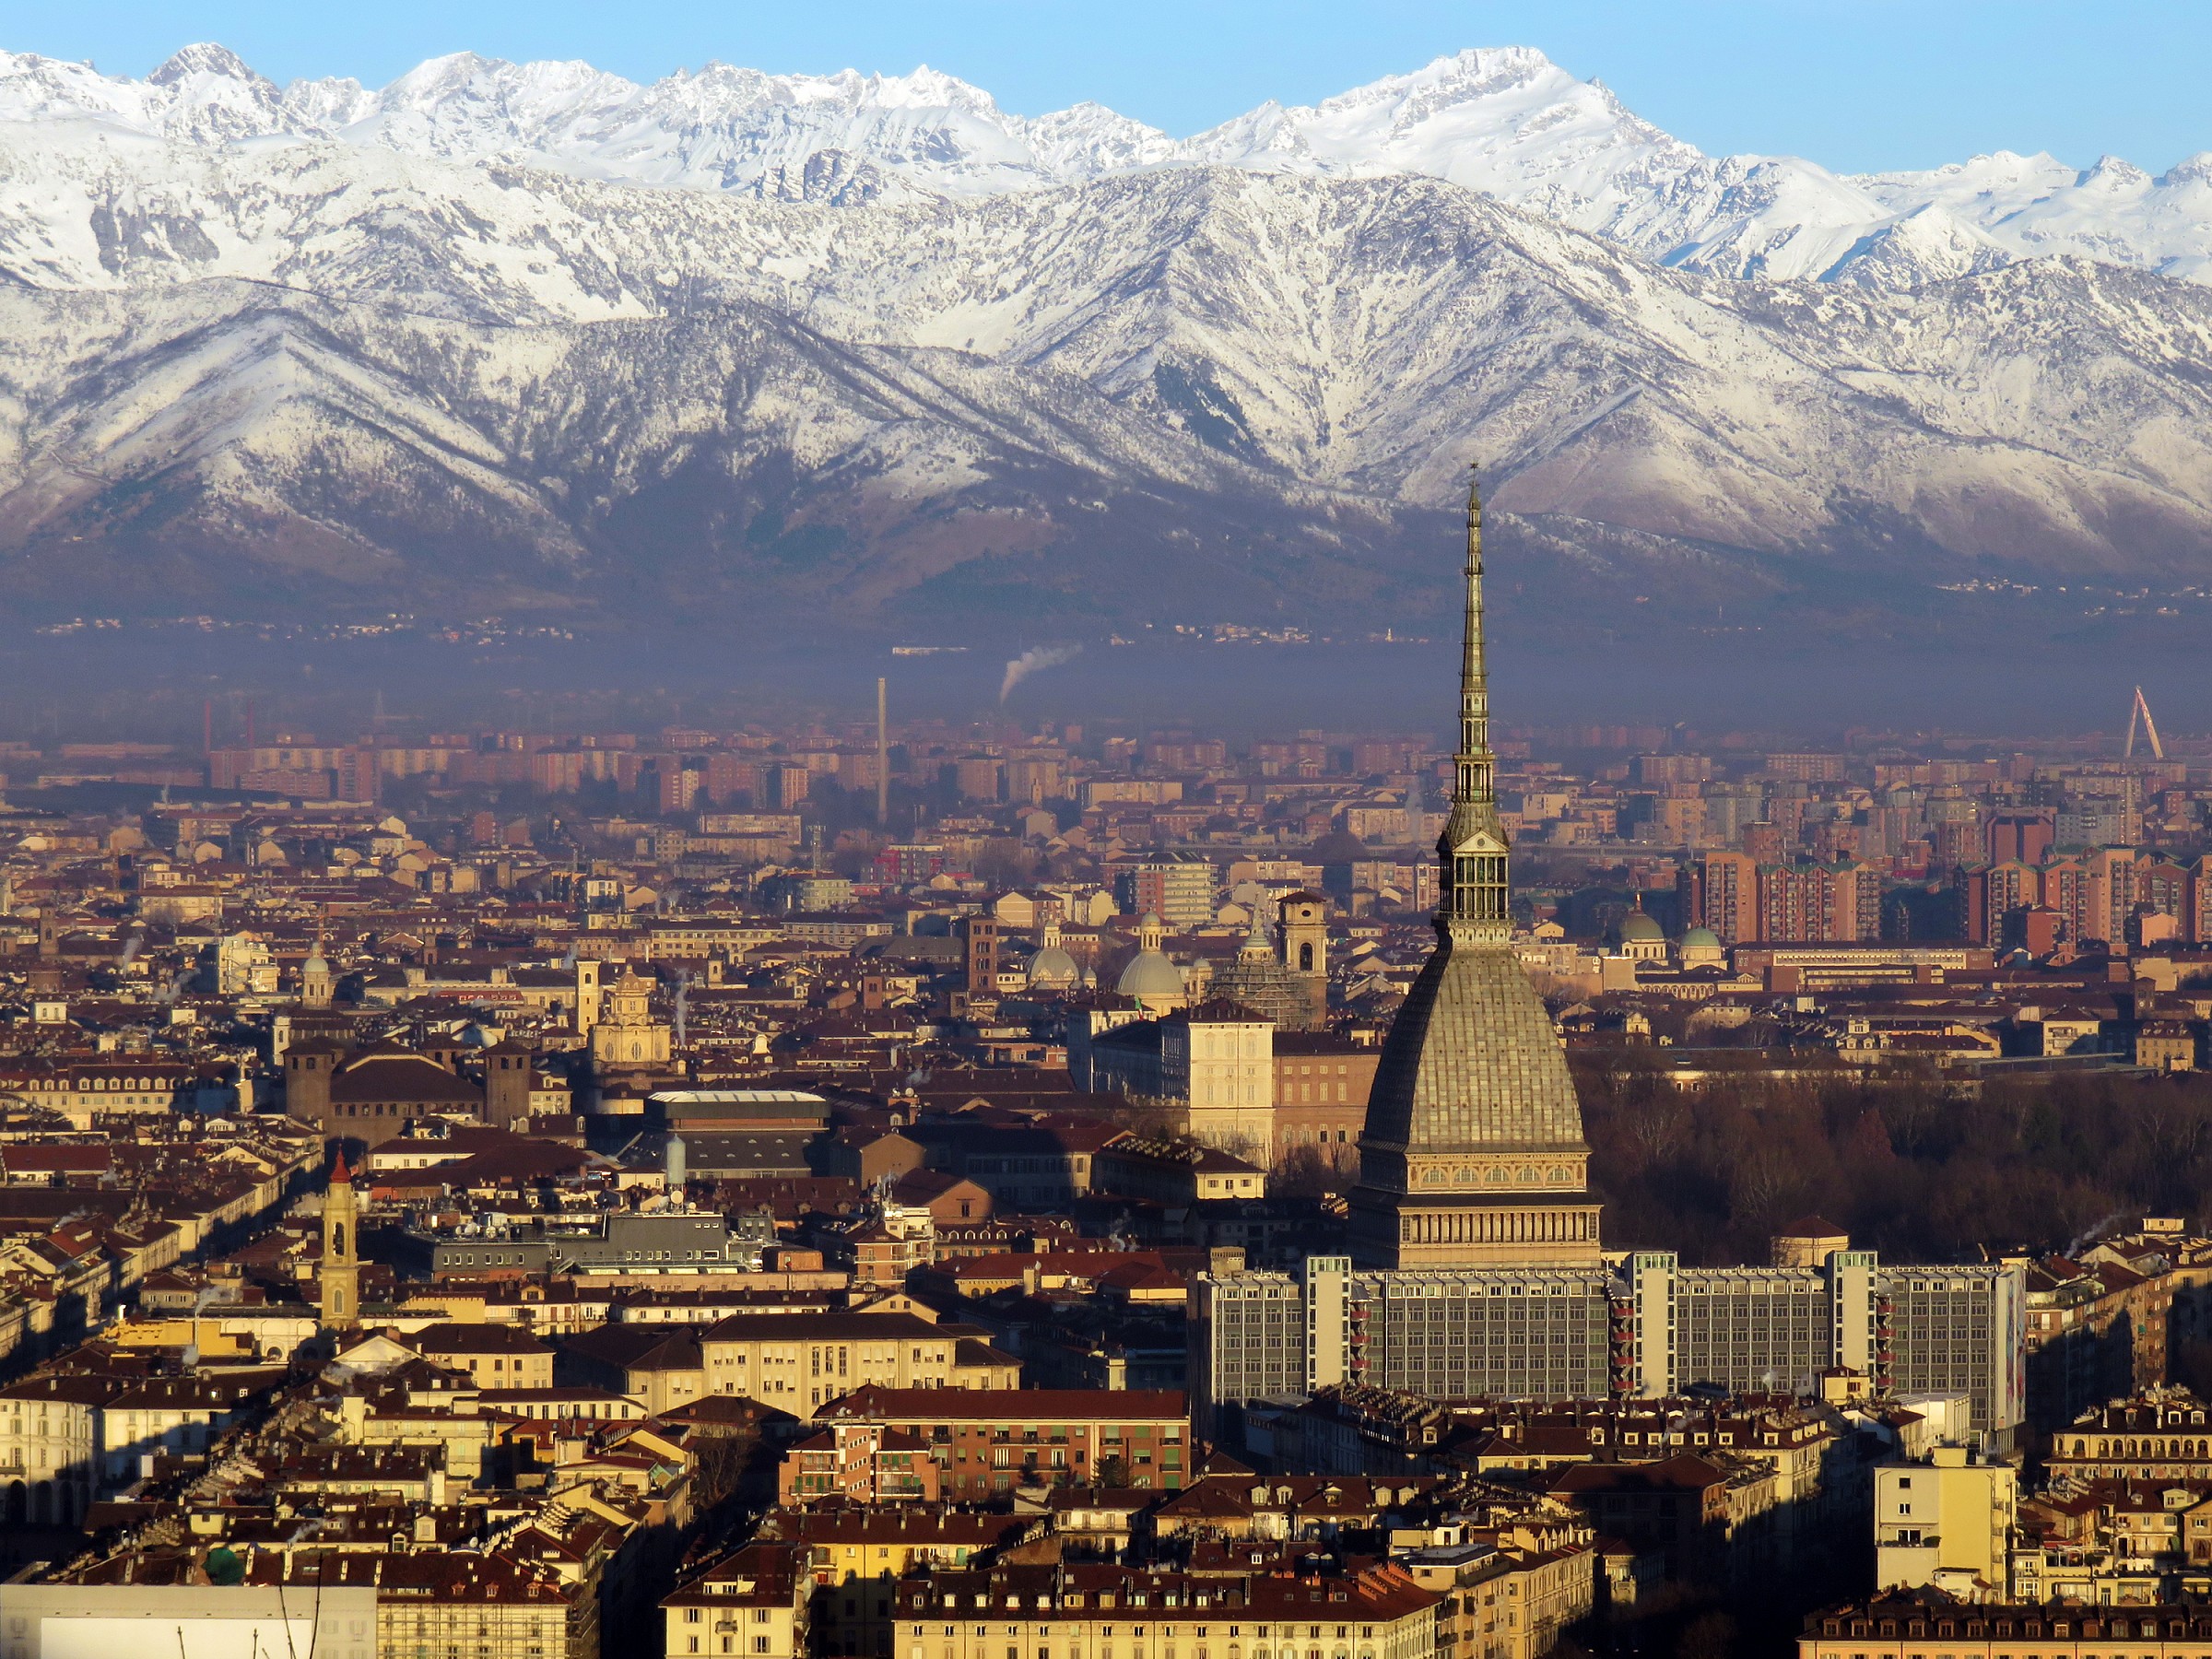 The sun rises on Turin...